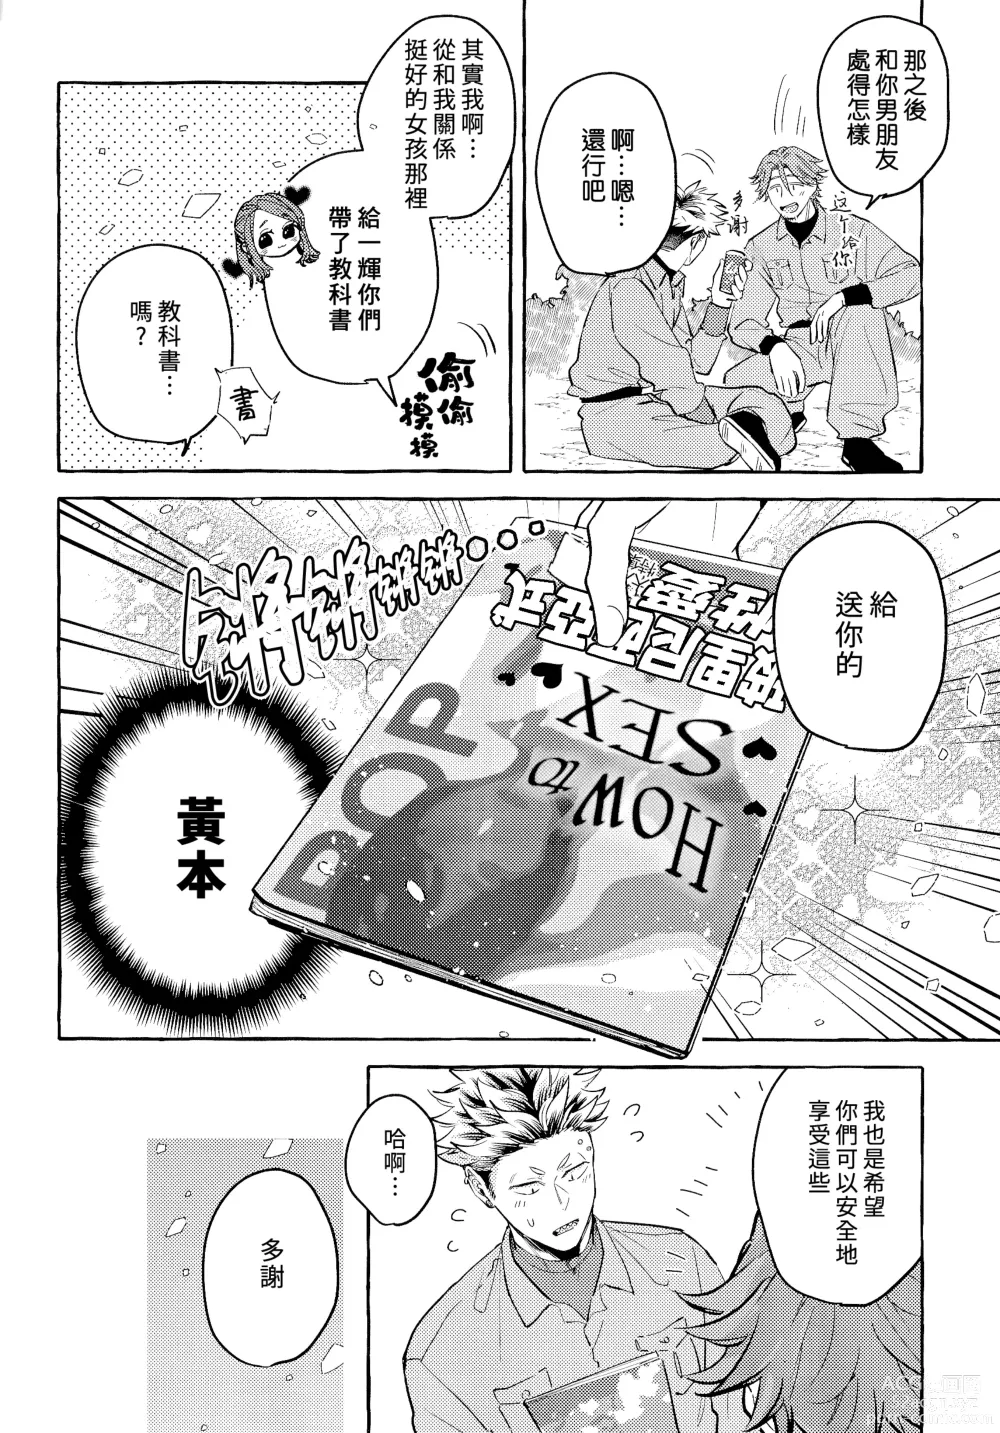 Page 7 of doujinshi skip run!run!run! (uncensored)